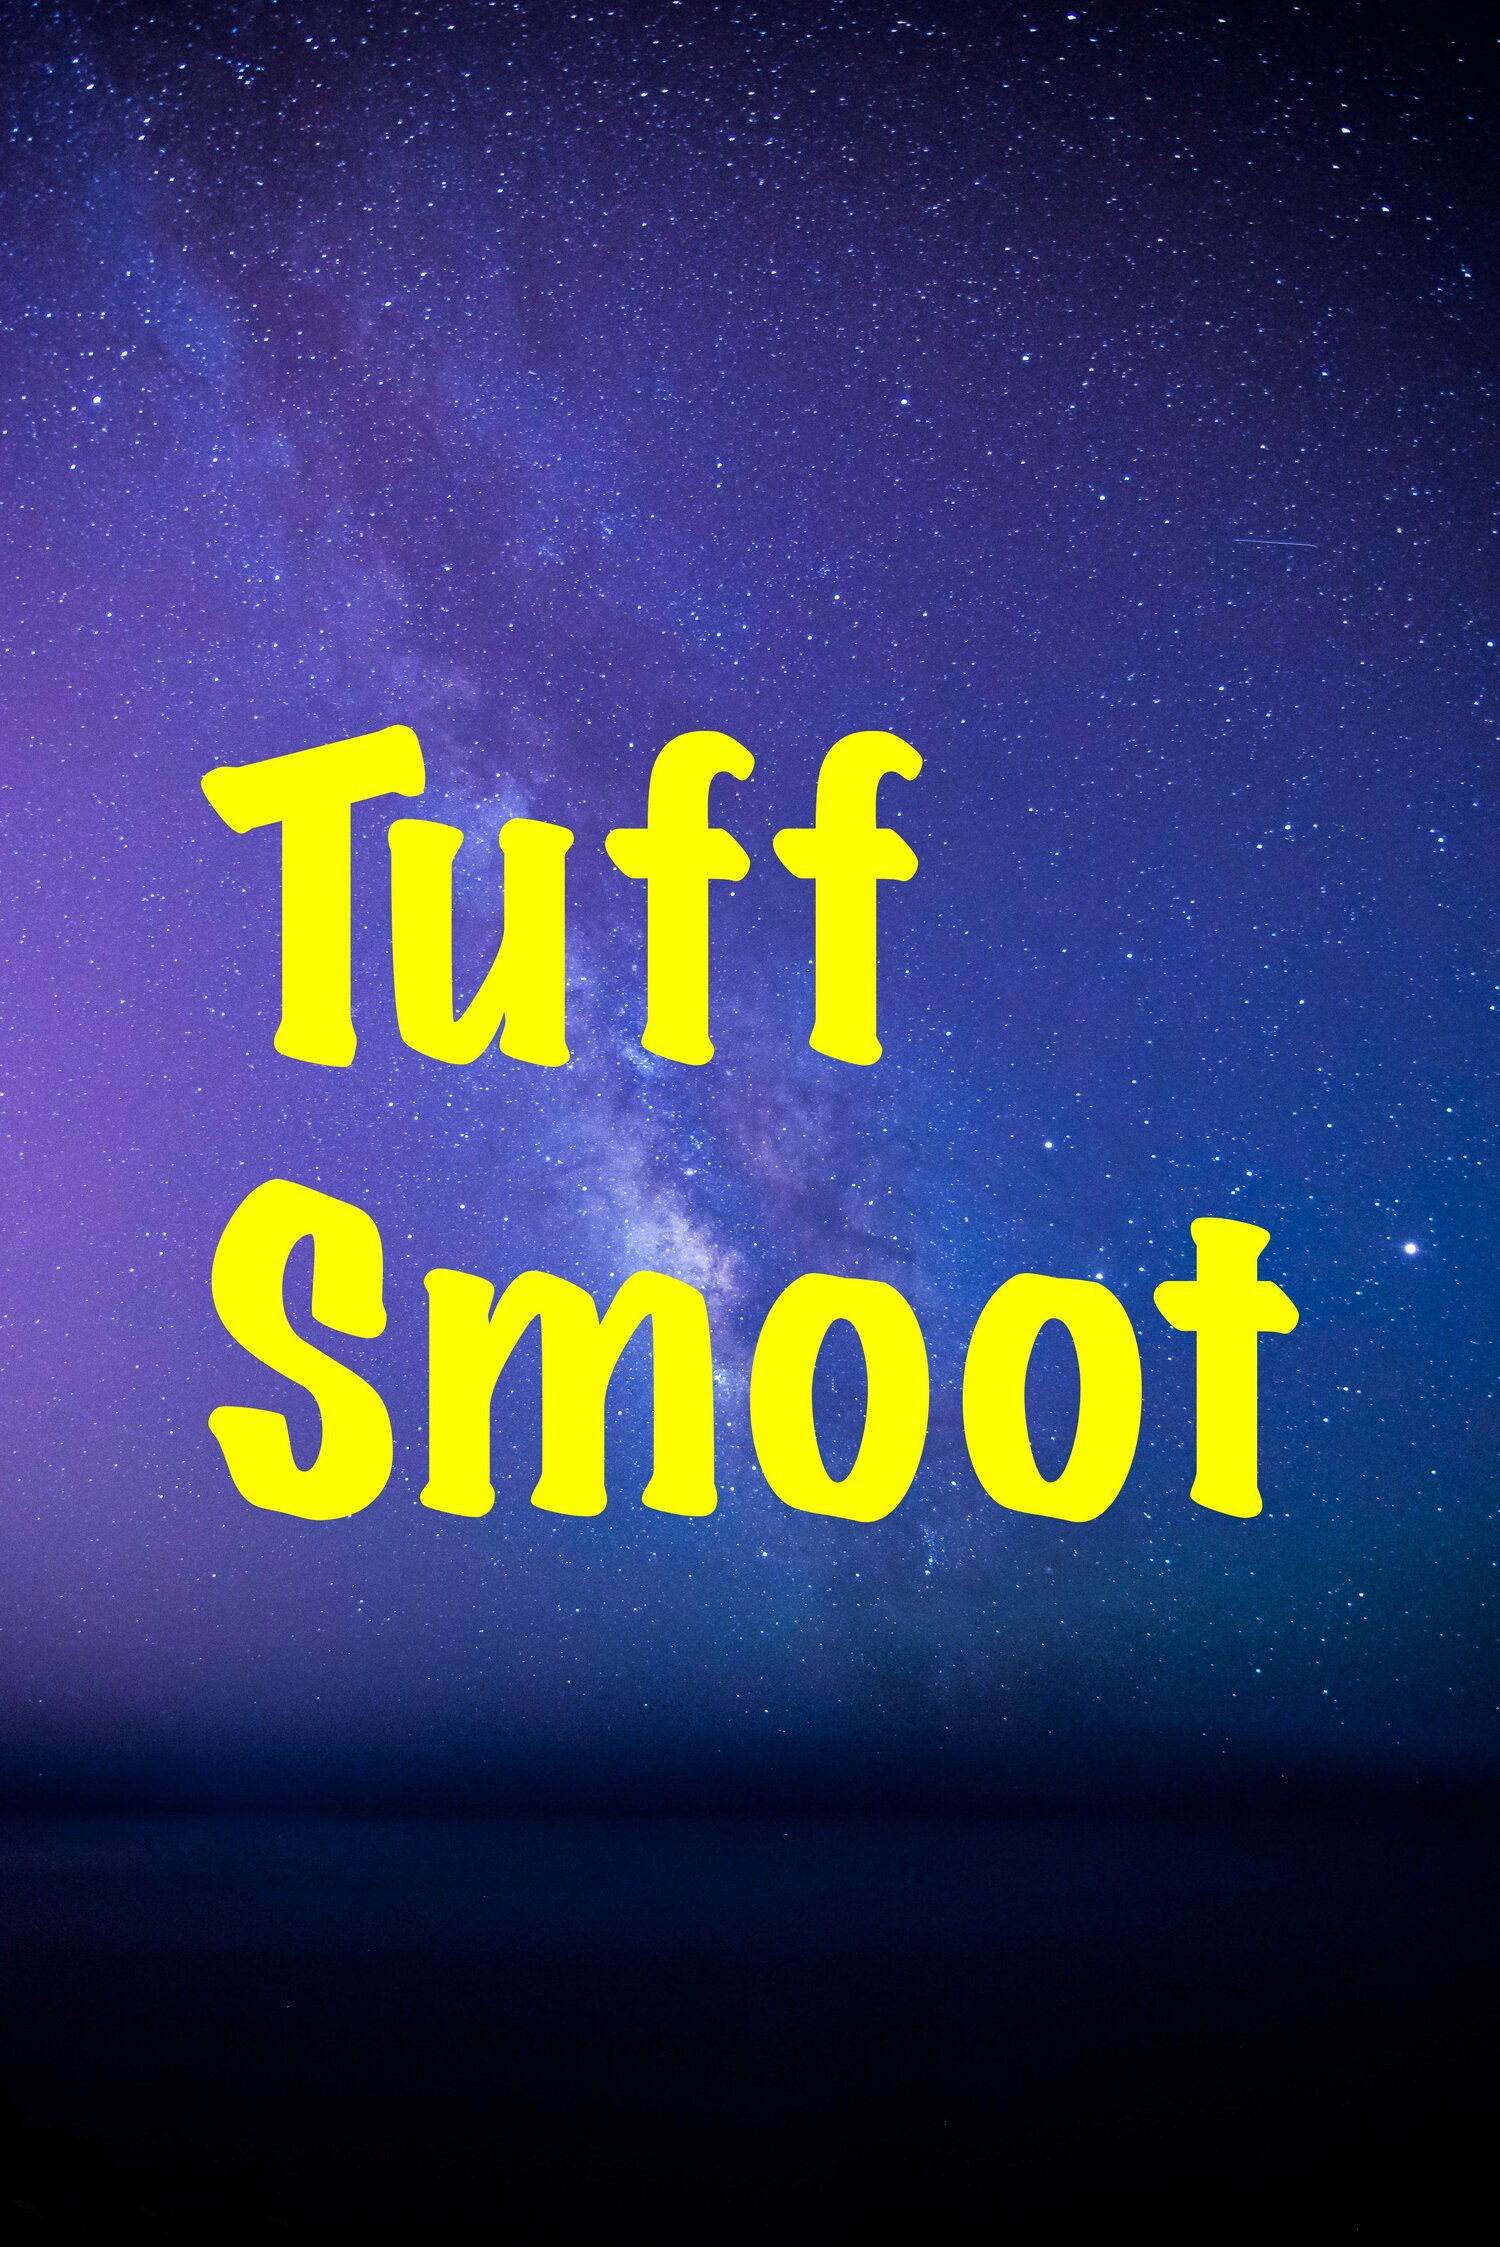 Tuff Smoot